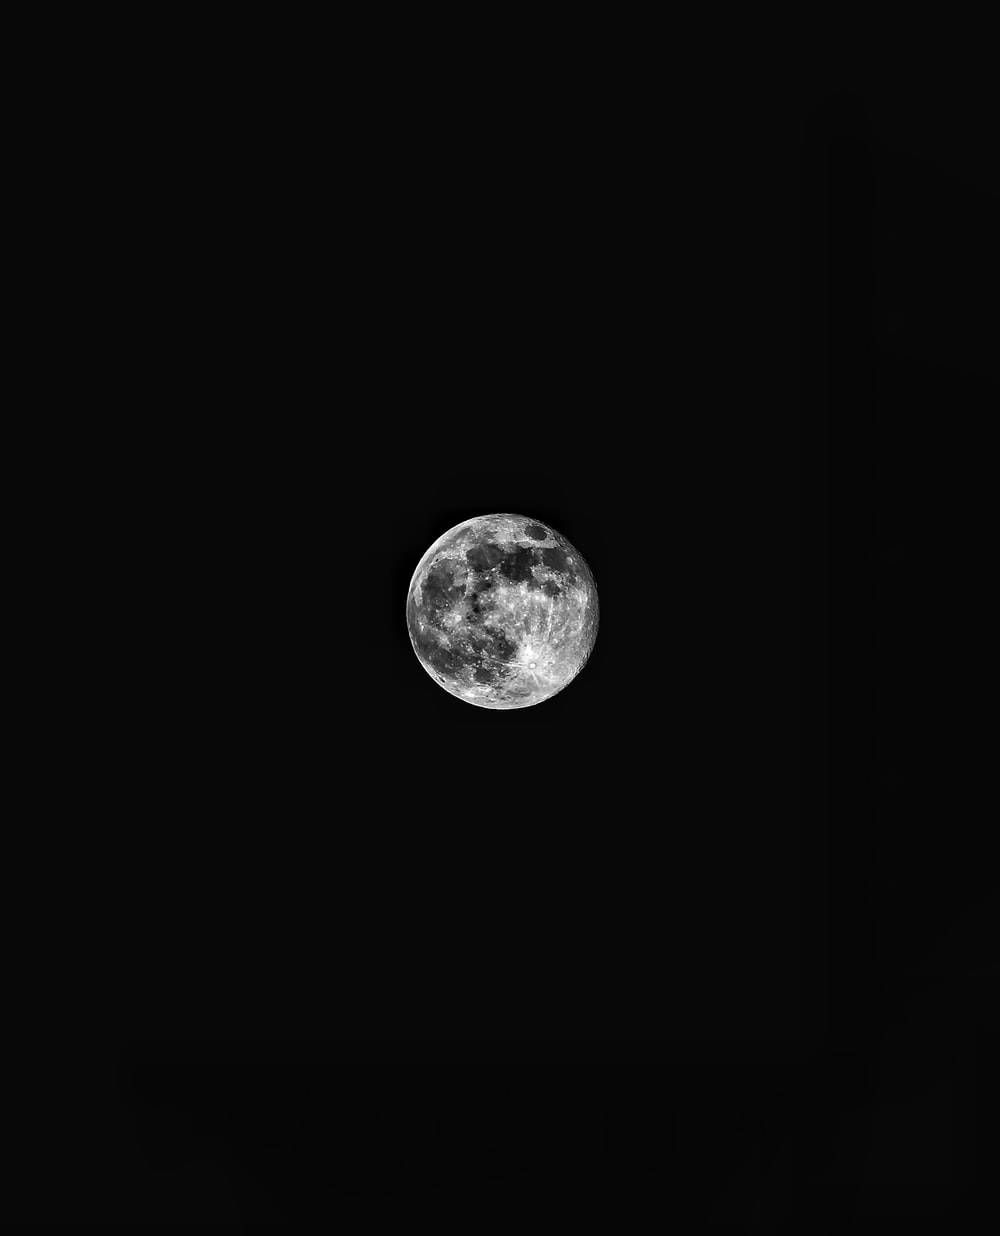 A full moon in the night sky - Moon